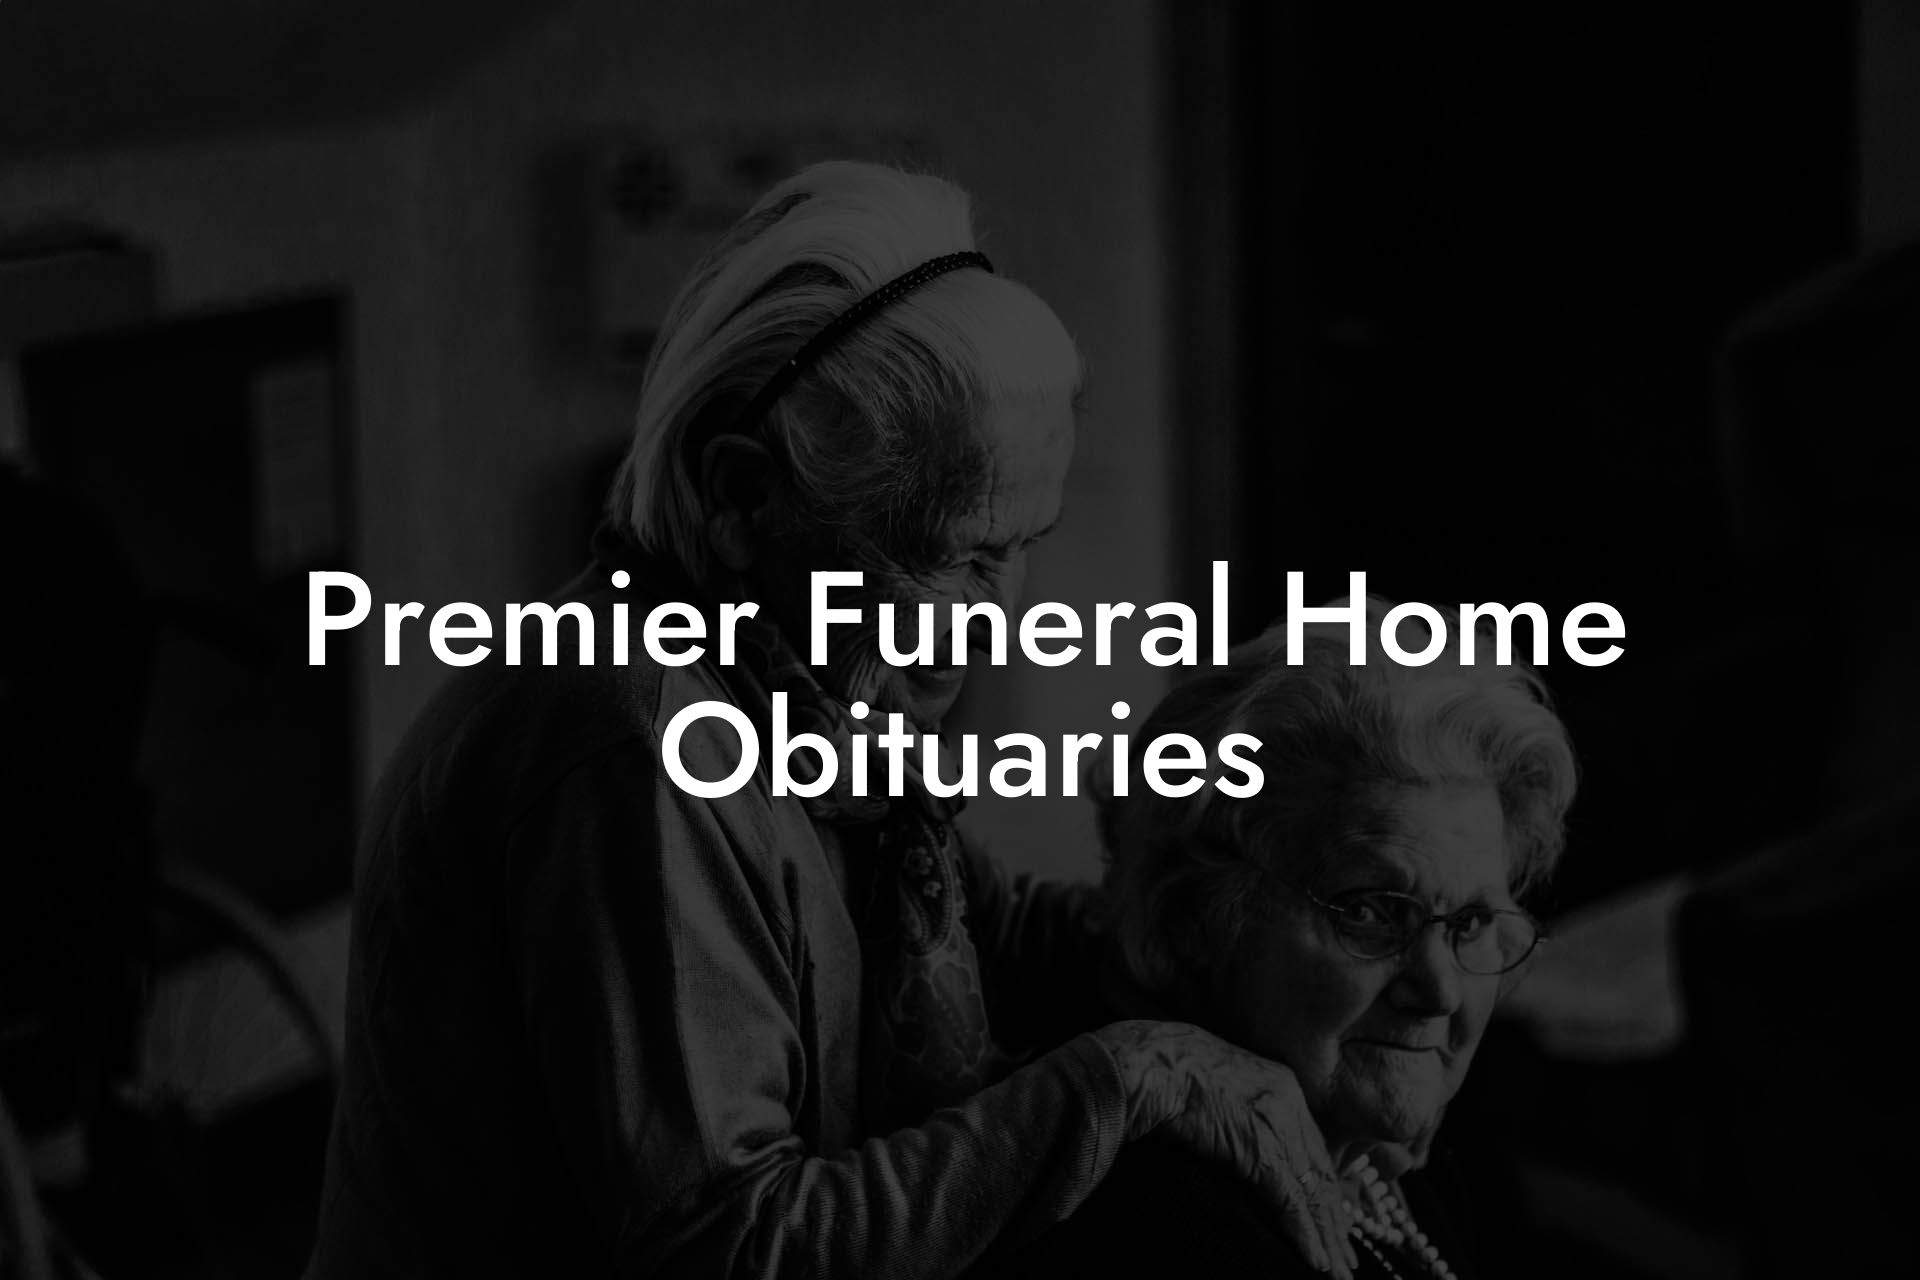 Premier Funeral Home Obituaries